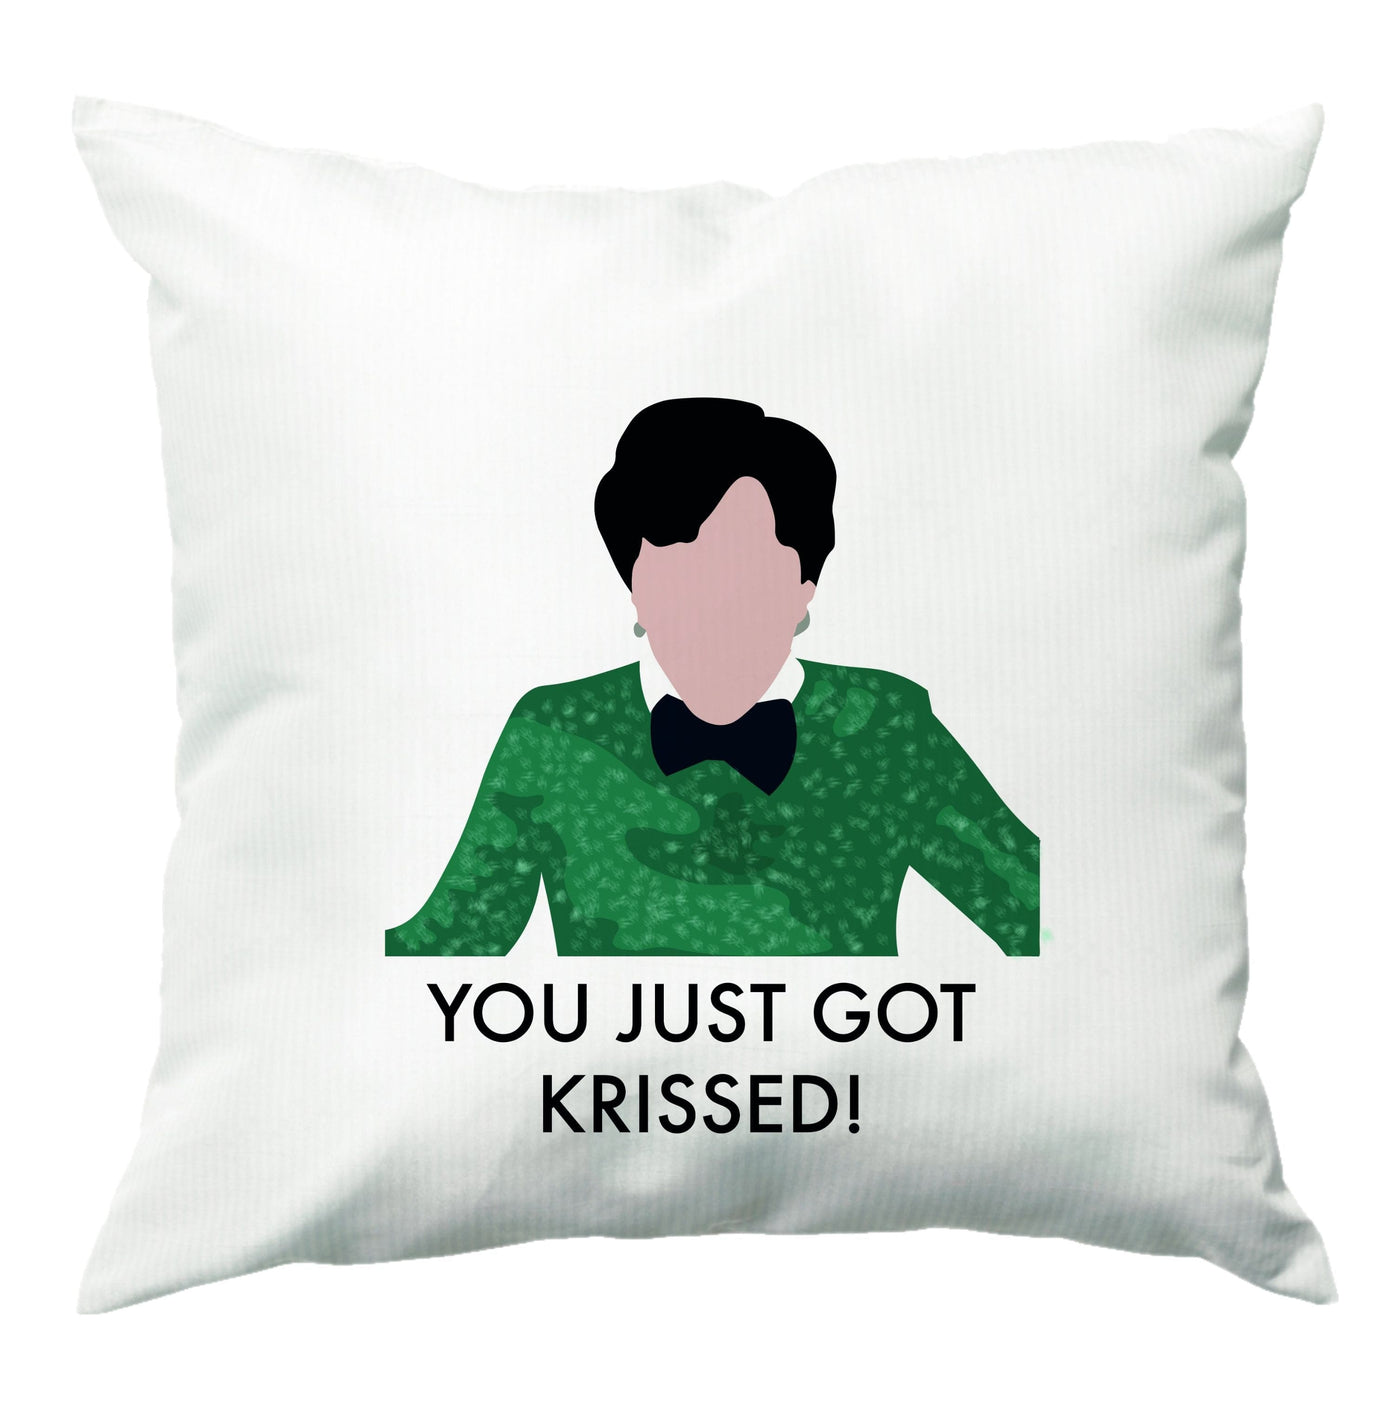 You just got krissed! - Kris Jenner Cushion